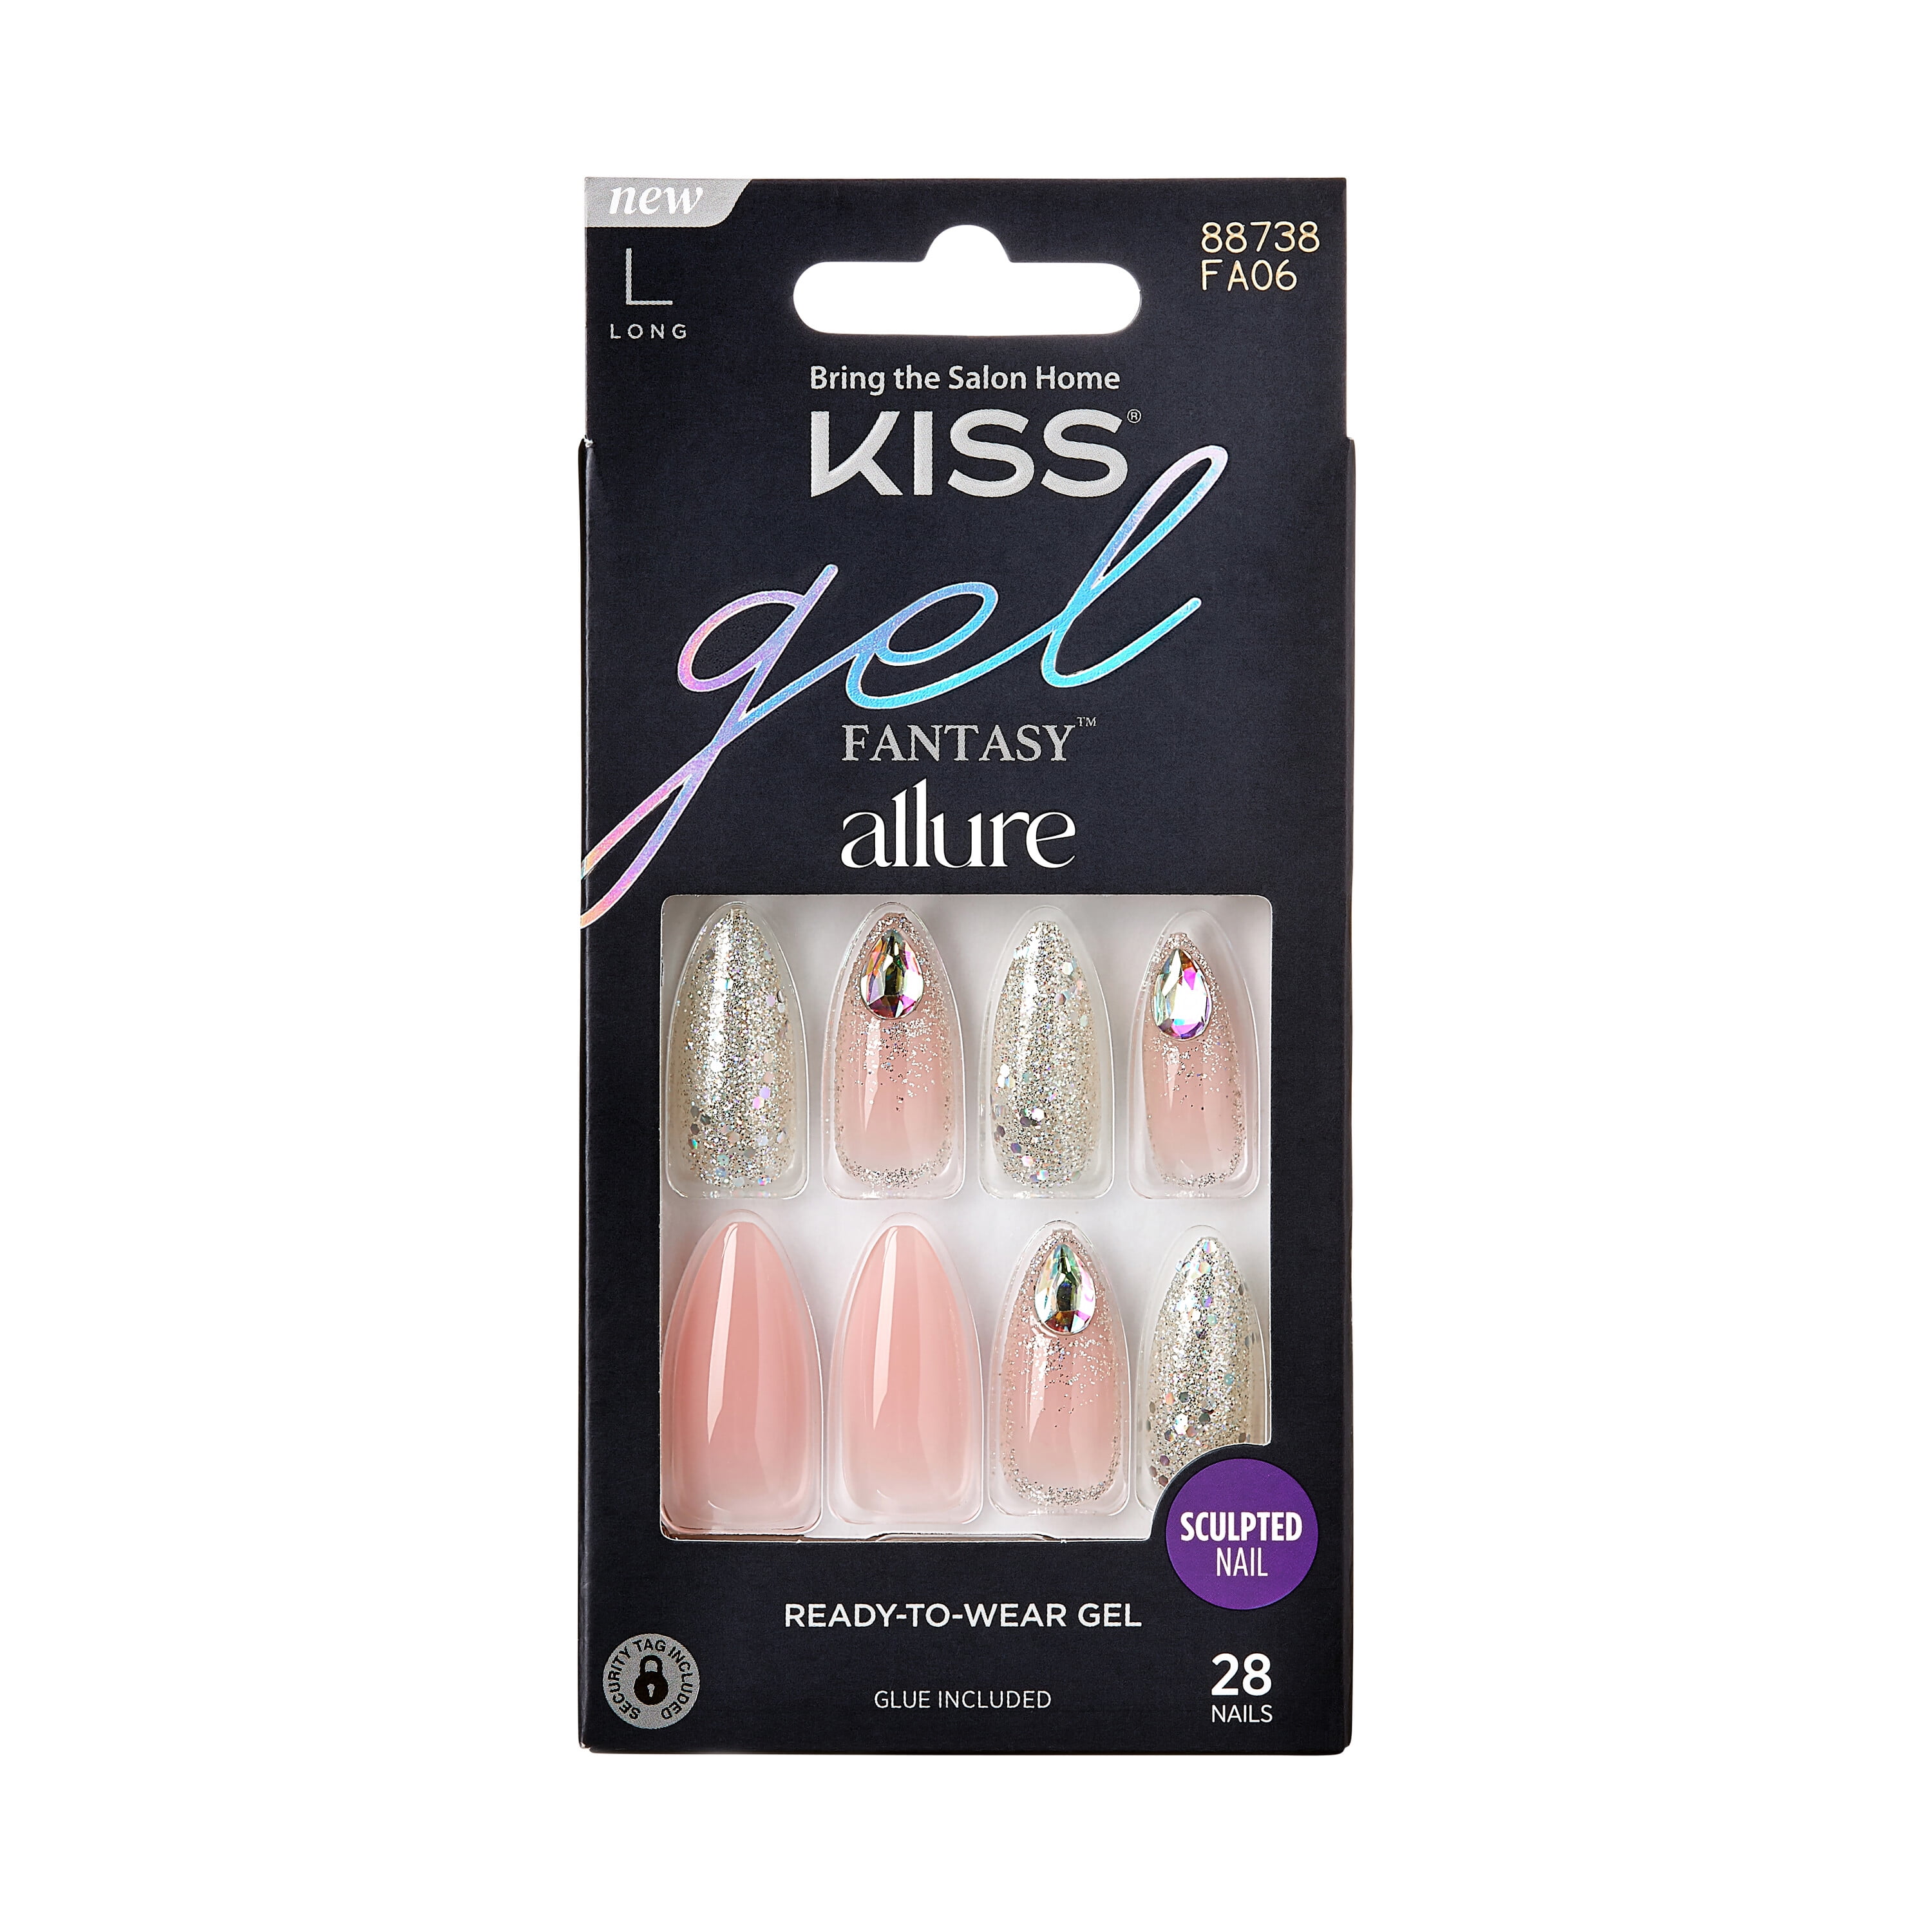 KISS Nails MASTERPIECE LUXE Glue Manicure LONG Gel Coffin Pink Silver Gems  | eBay